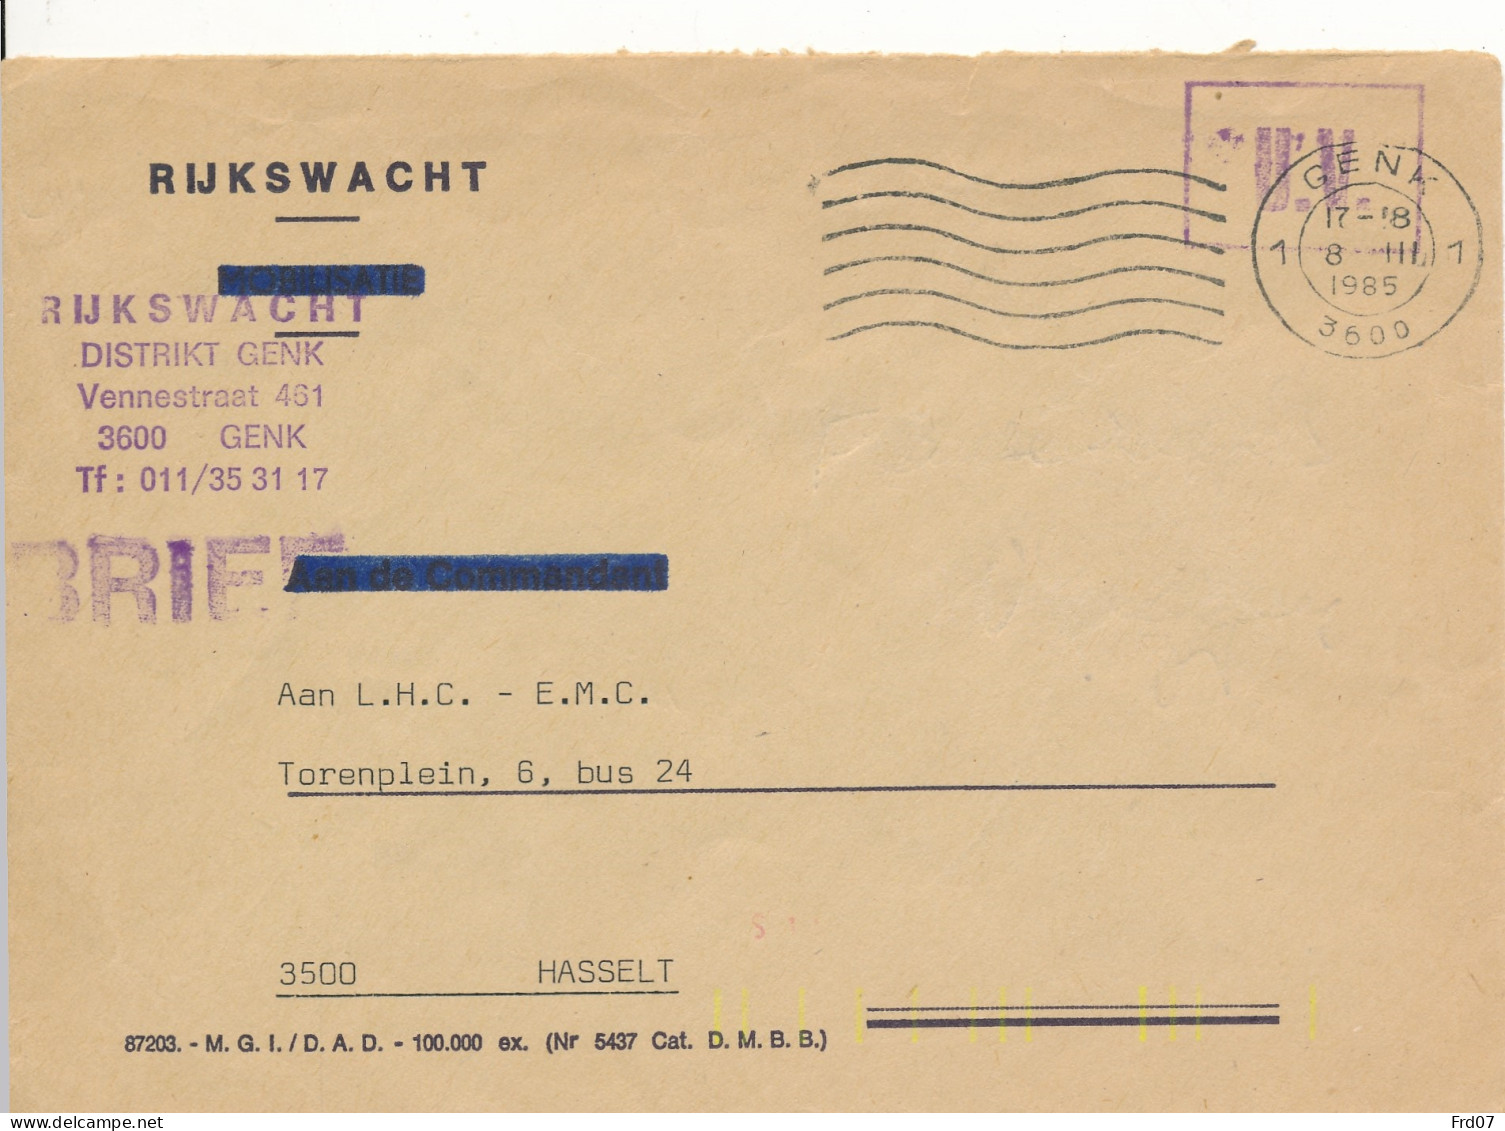 Porto Vrije Brief – U.V. – Rijkswacht District Genk 8 III 1985 - Zonder Portkosten